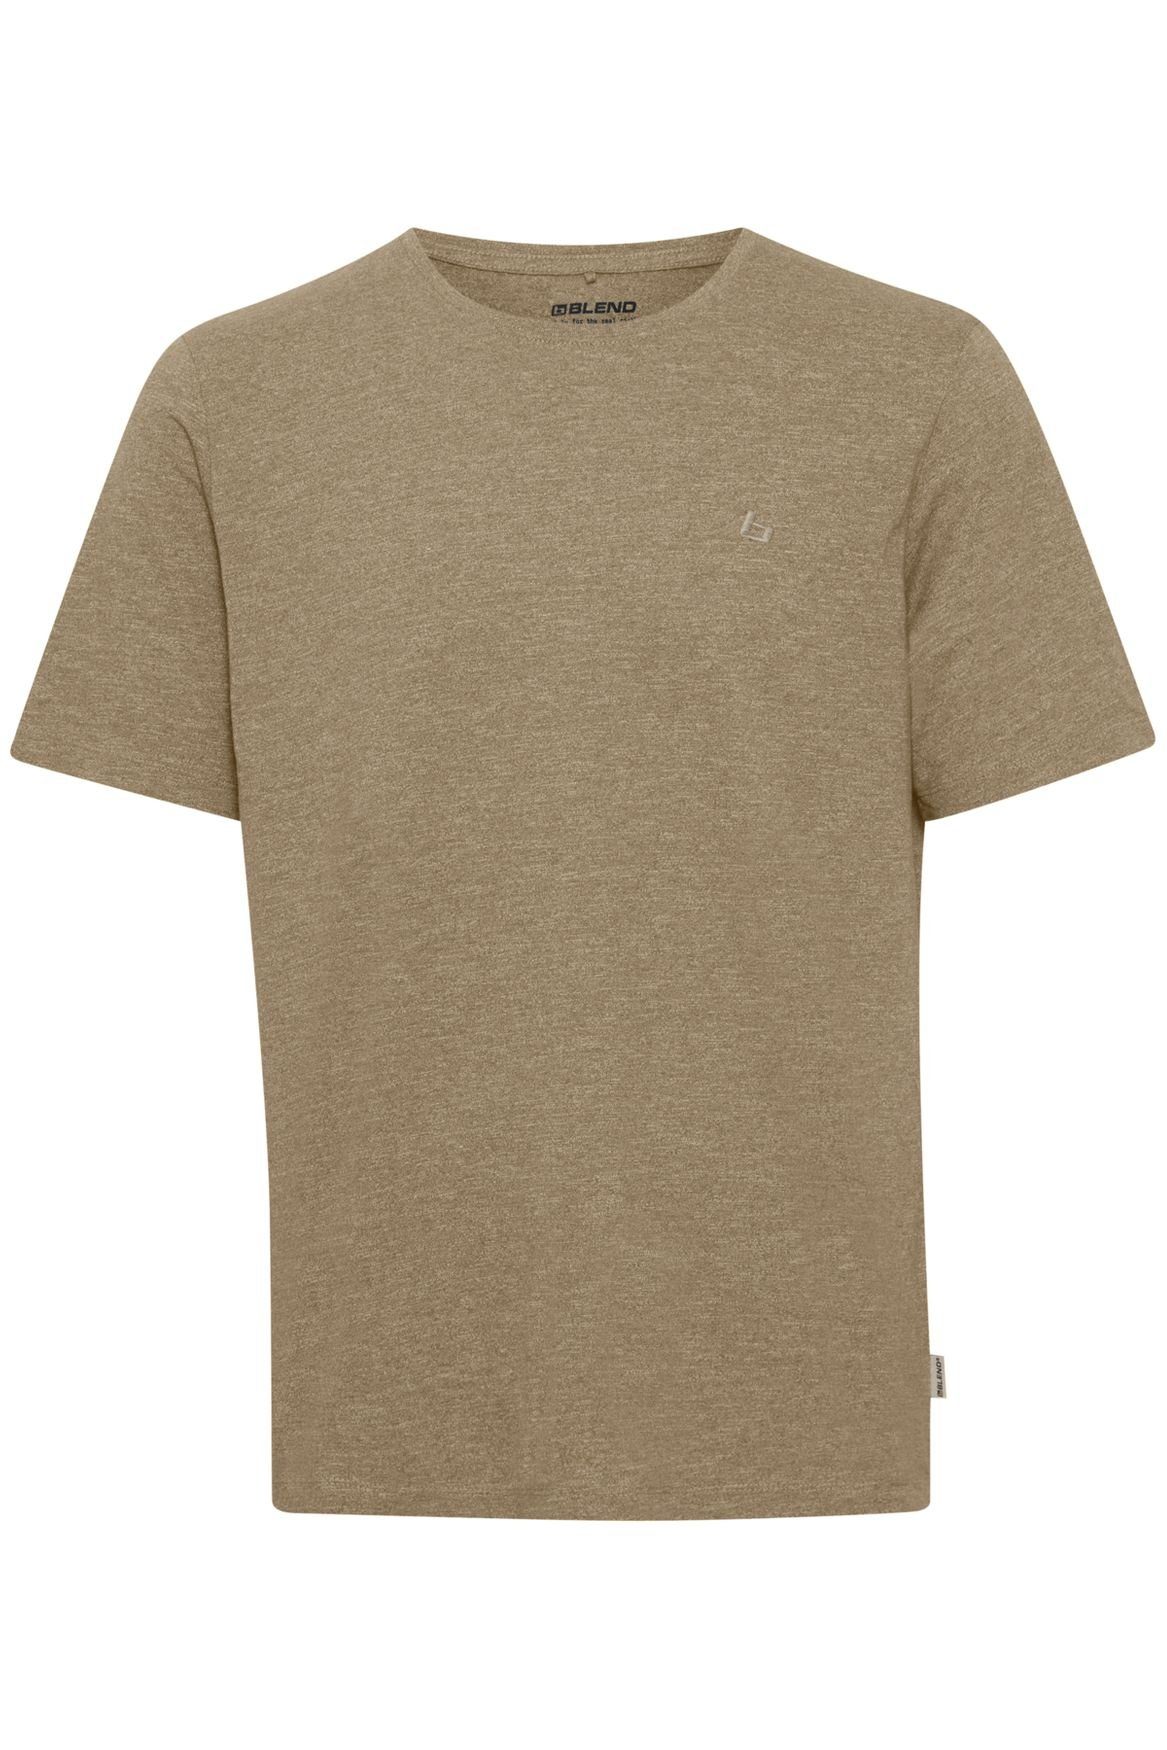 Kurzarm BHWilton Blend Rundhals T-Shirt Beige T-Shirt 5030 Shirt in Stretch